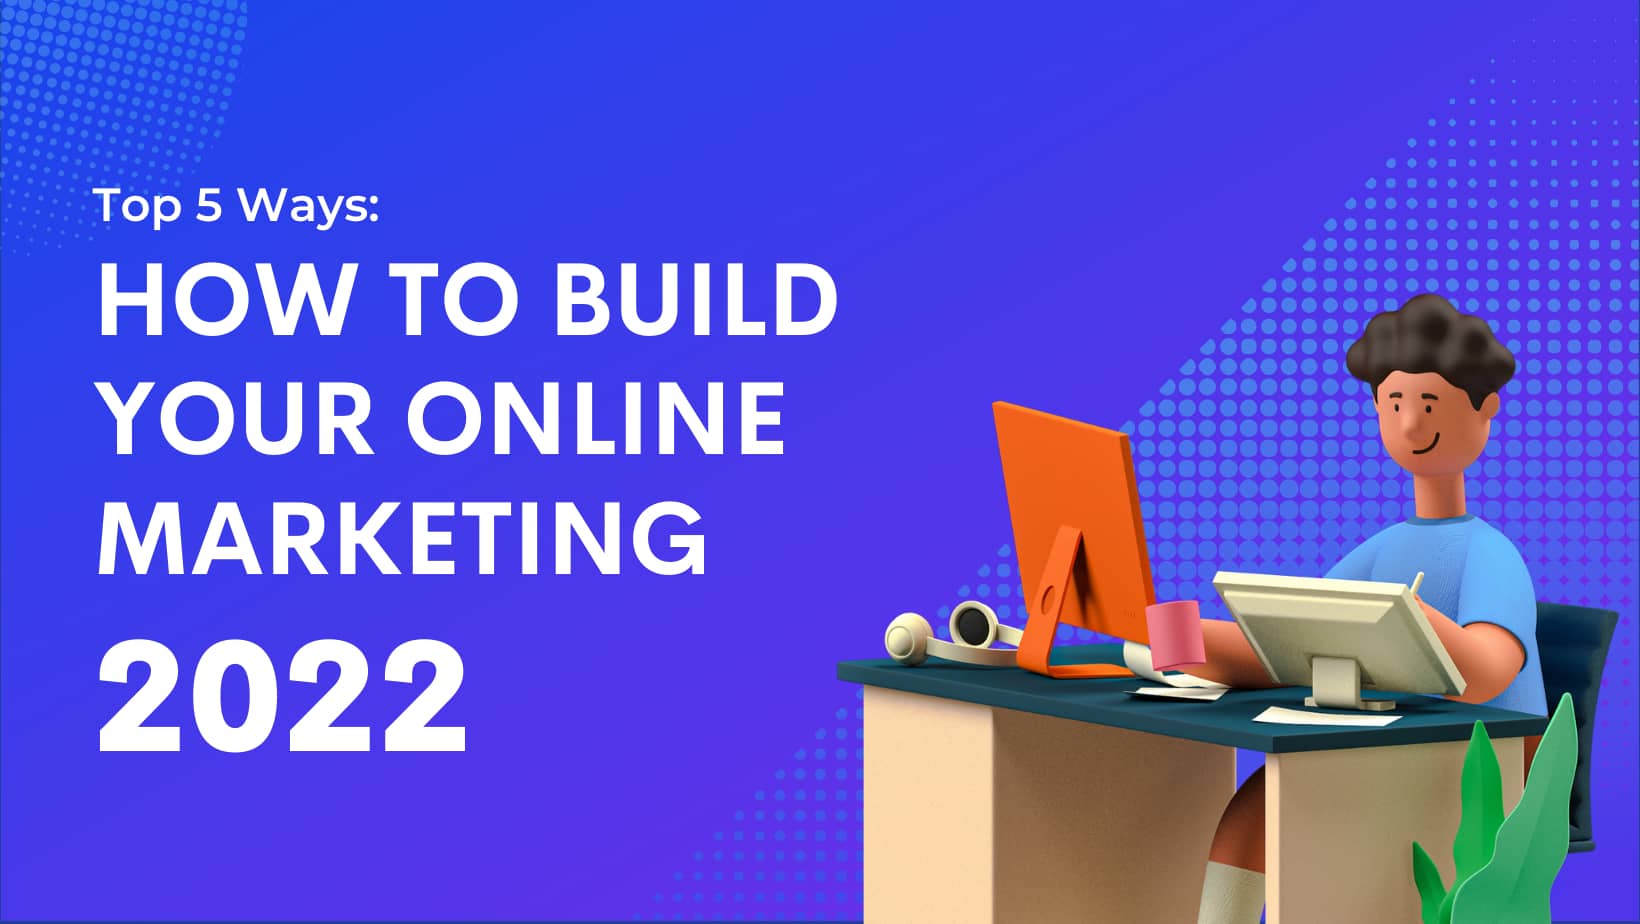 5 Best Ways: How to Build Your Online Marketing in 2022